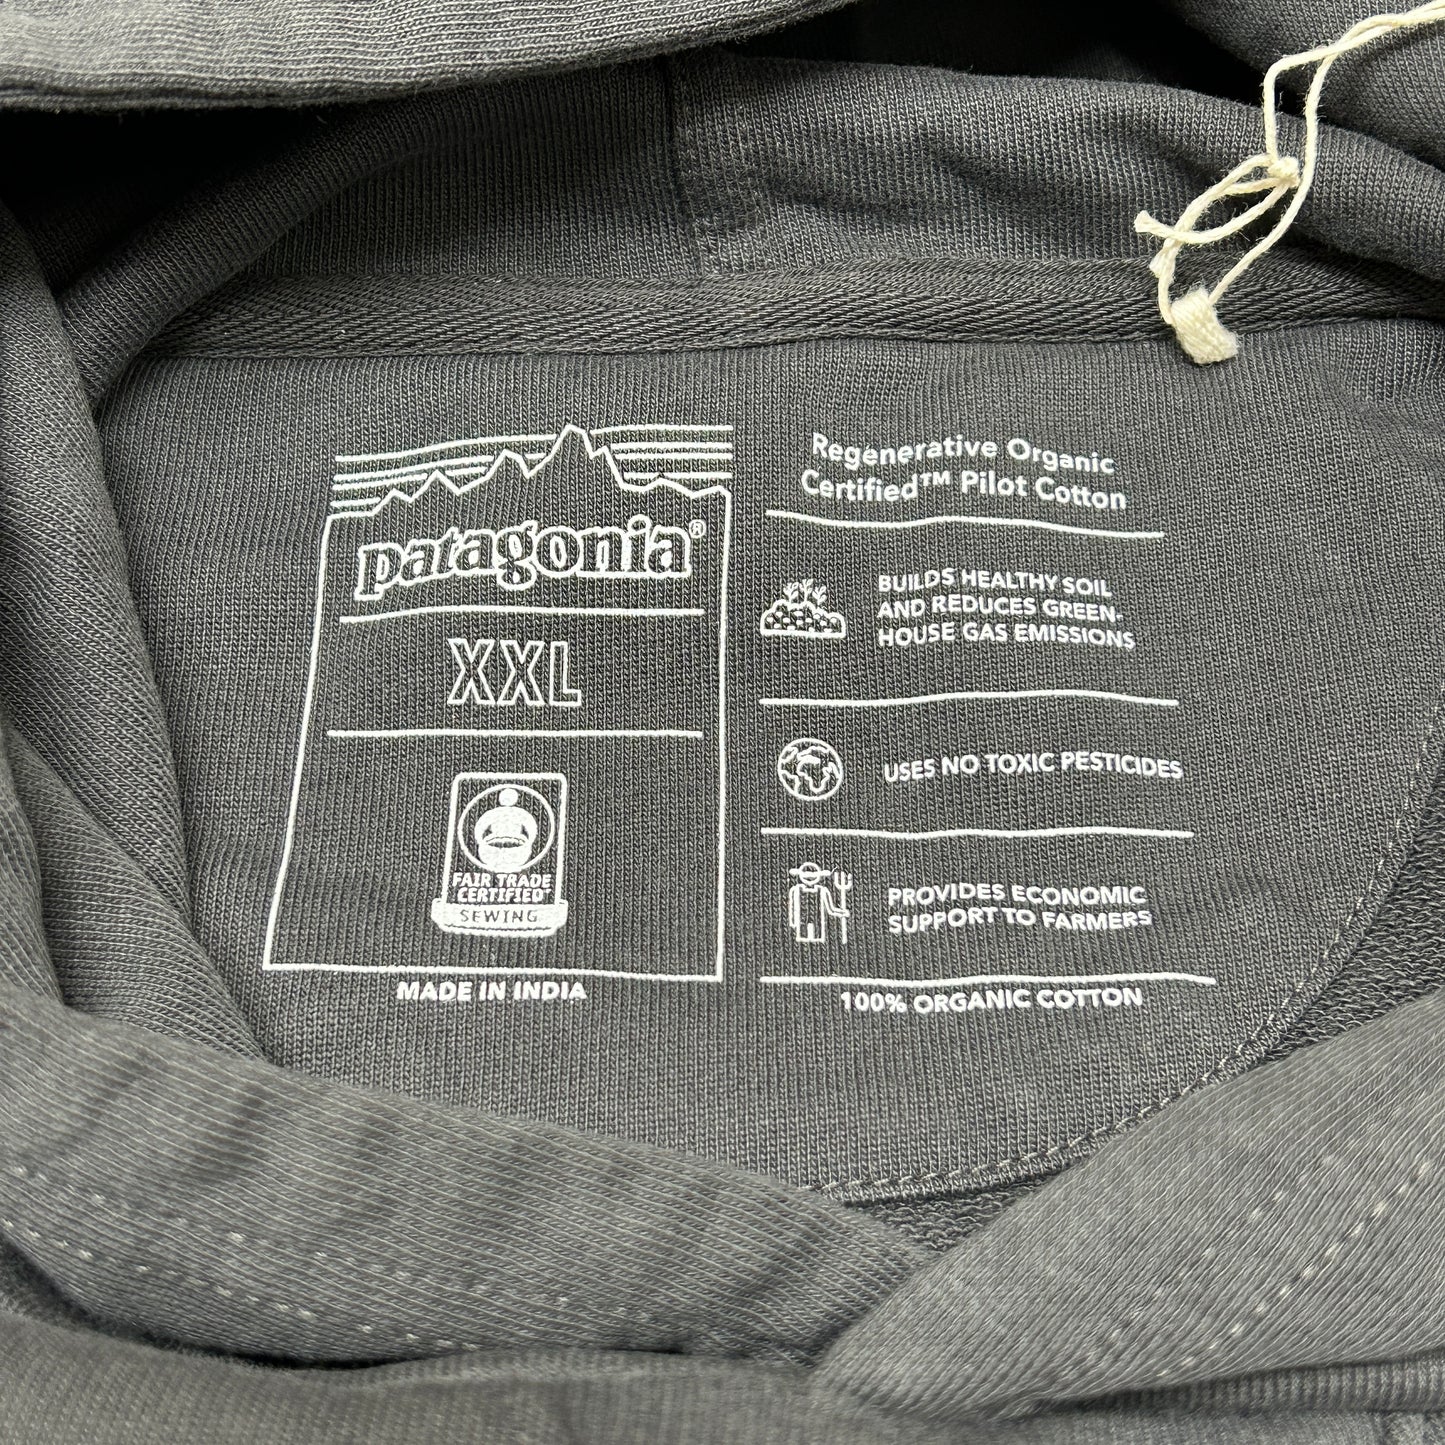 PATAGONIA Regenerative Organic Cotton Hoody Sweatshirt Sz XXL Ink Black (New)